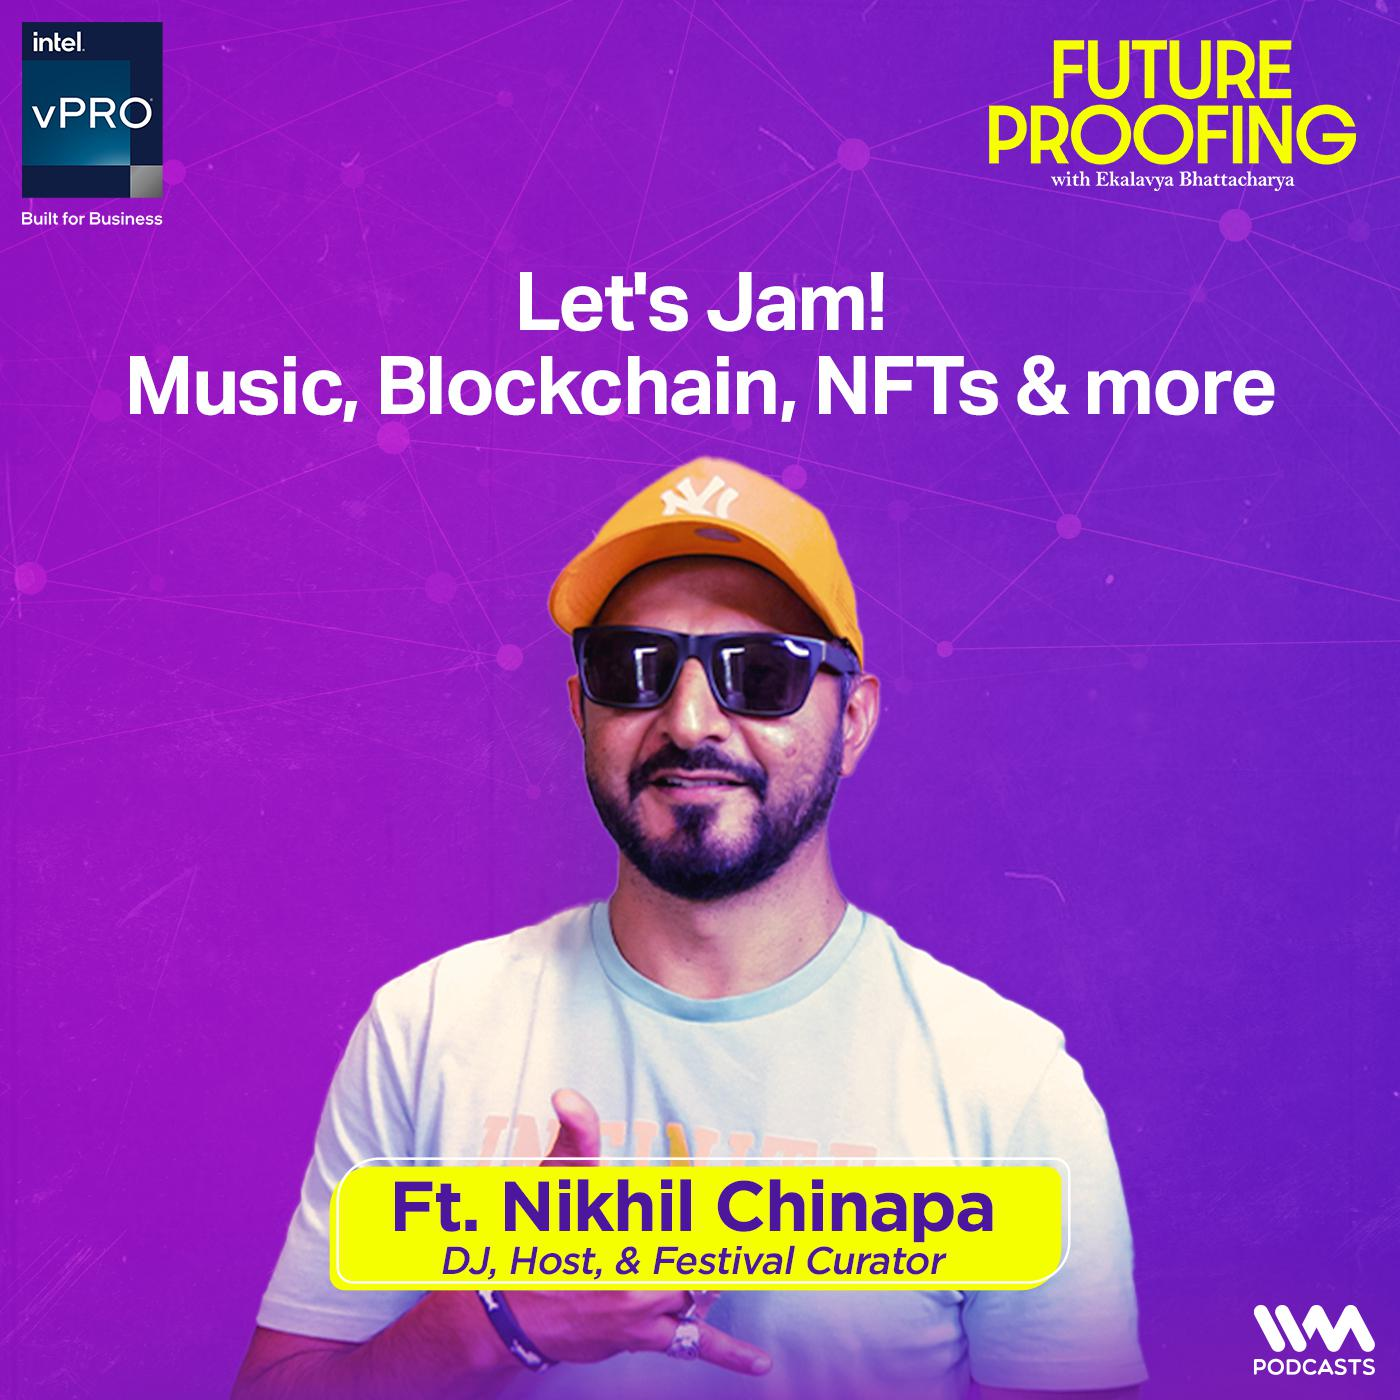 Let's Jam! Music, Blockchain, NFTs & more with Nikhil Chinapa